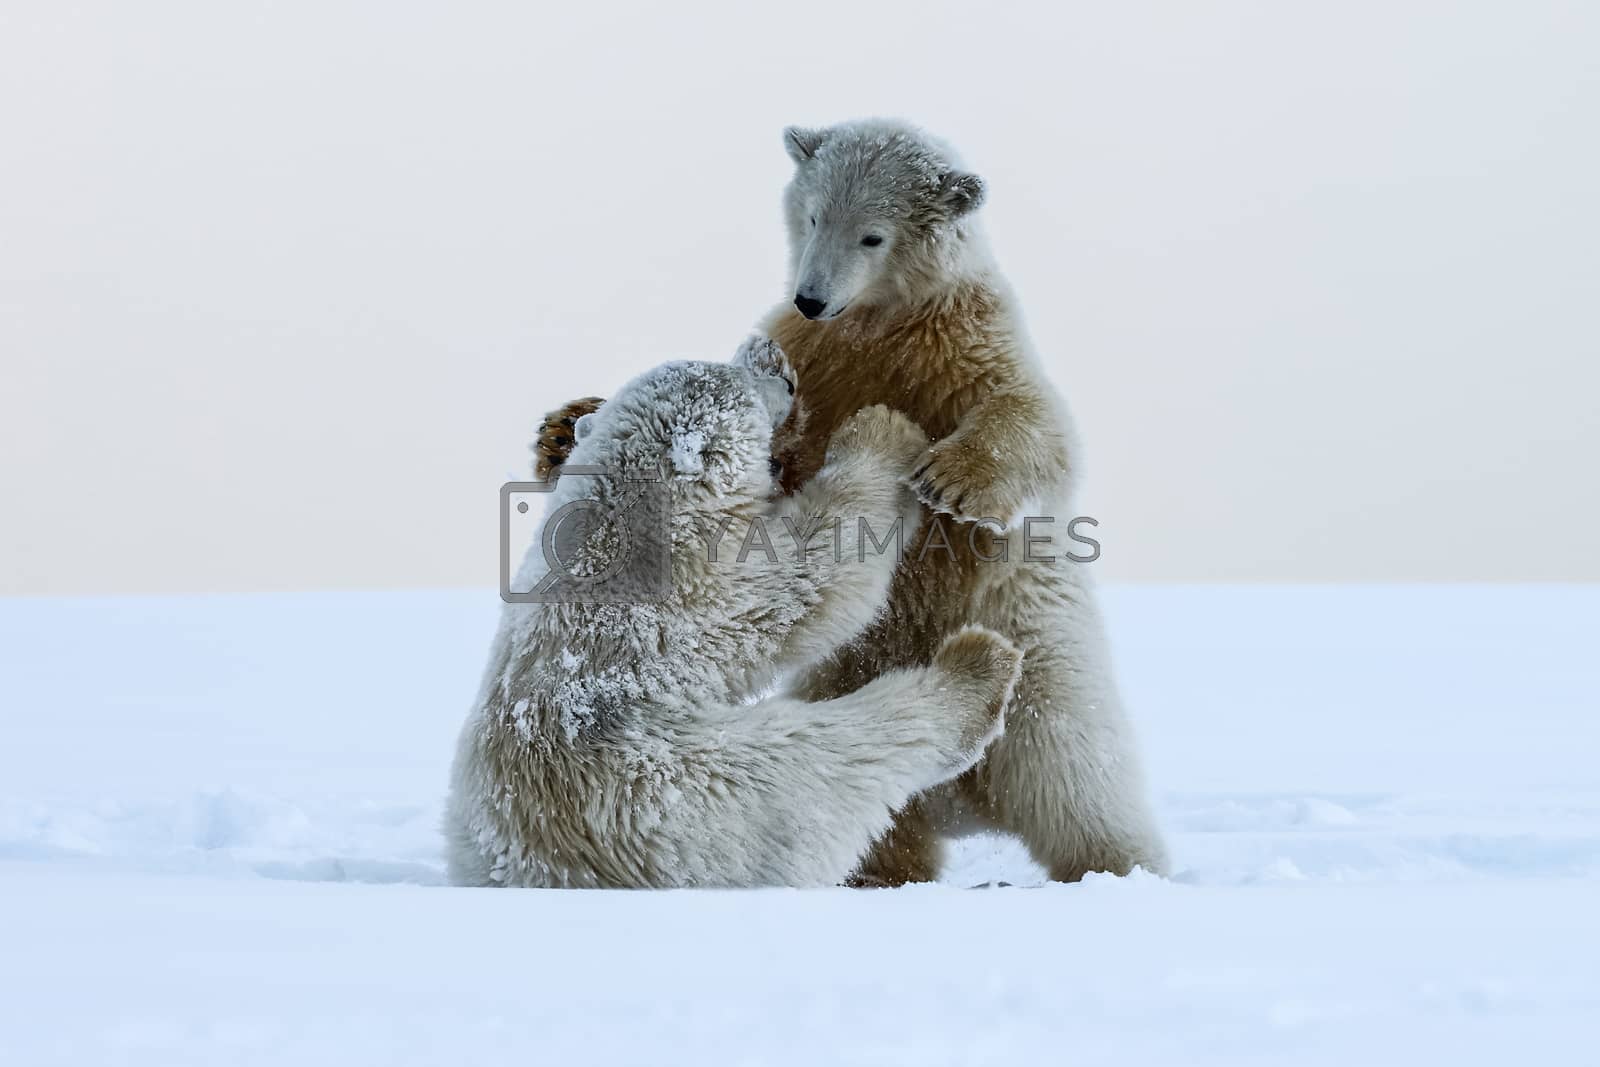 Royalty free image of Polar bear, northern arctic predator by nyrok